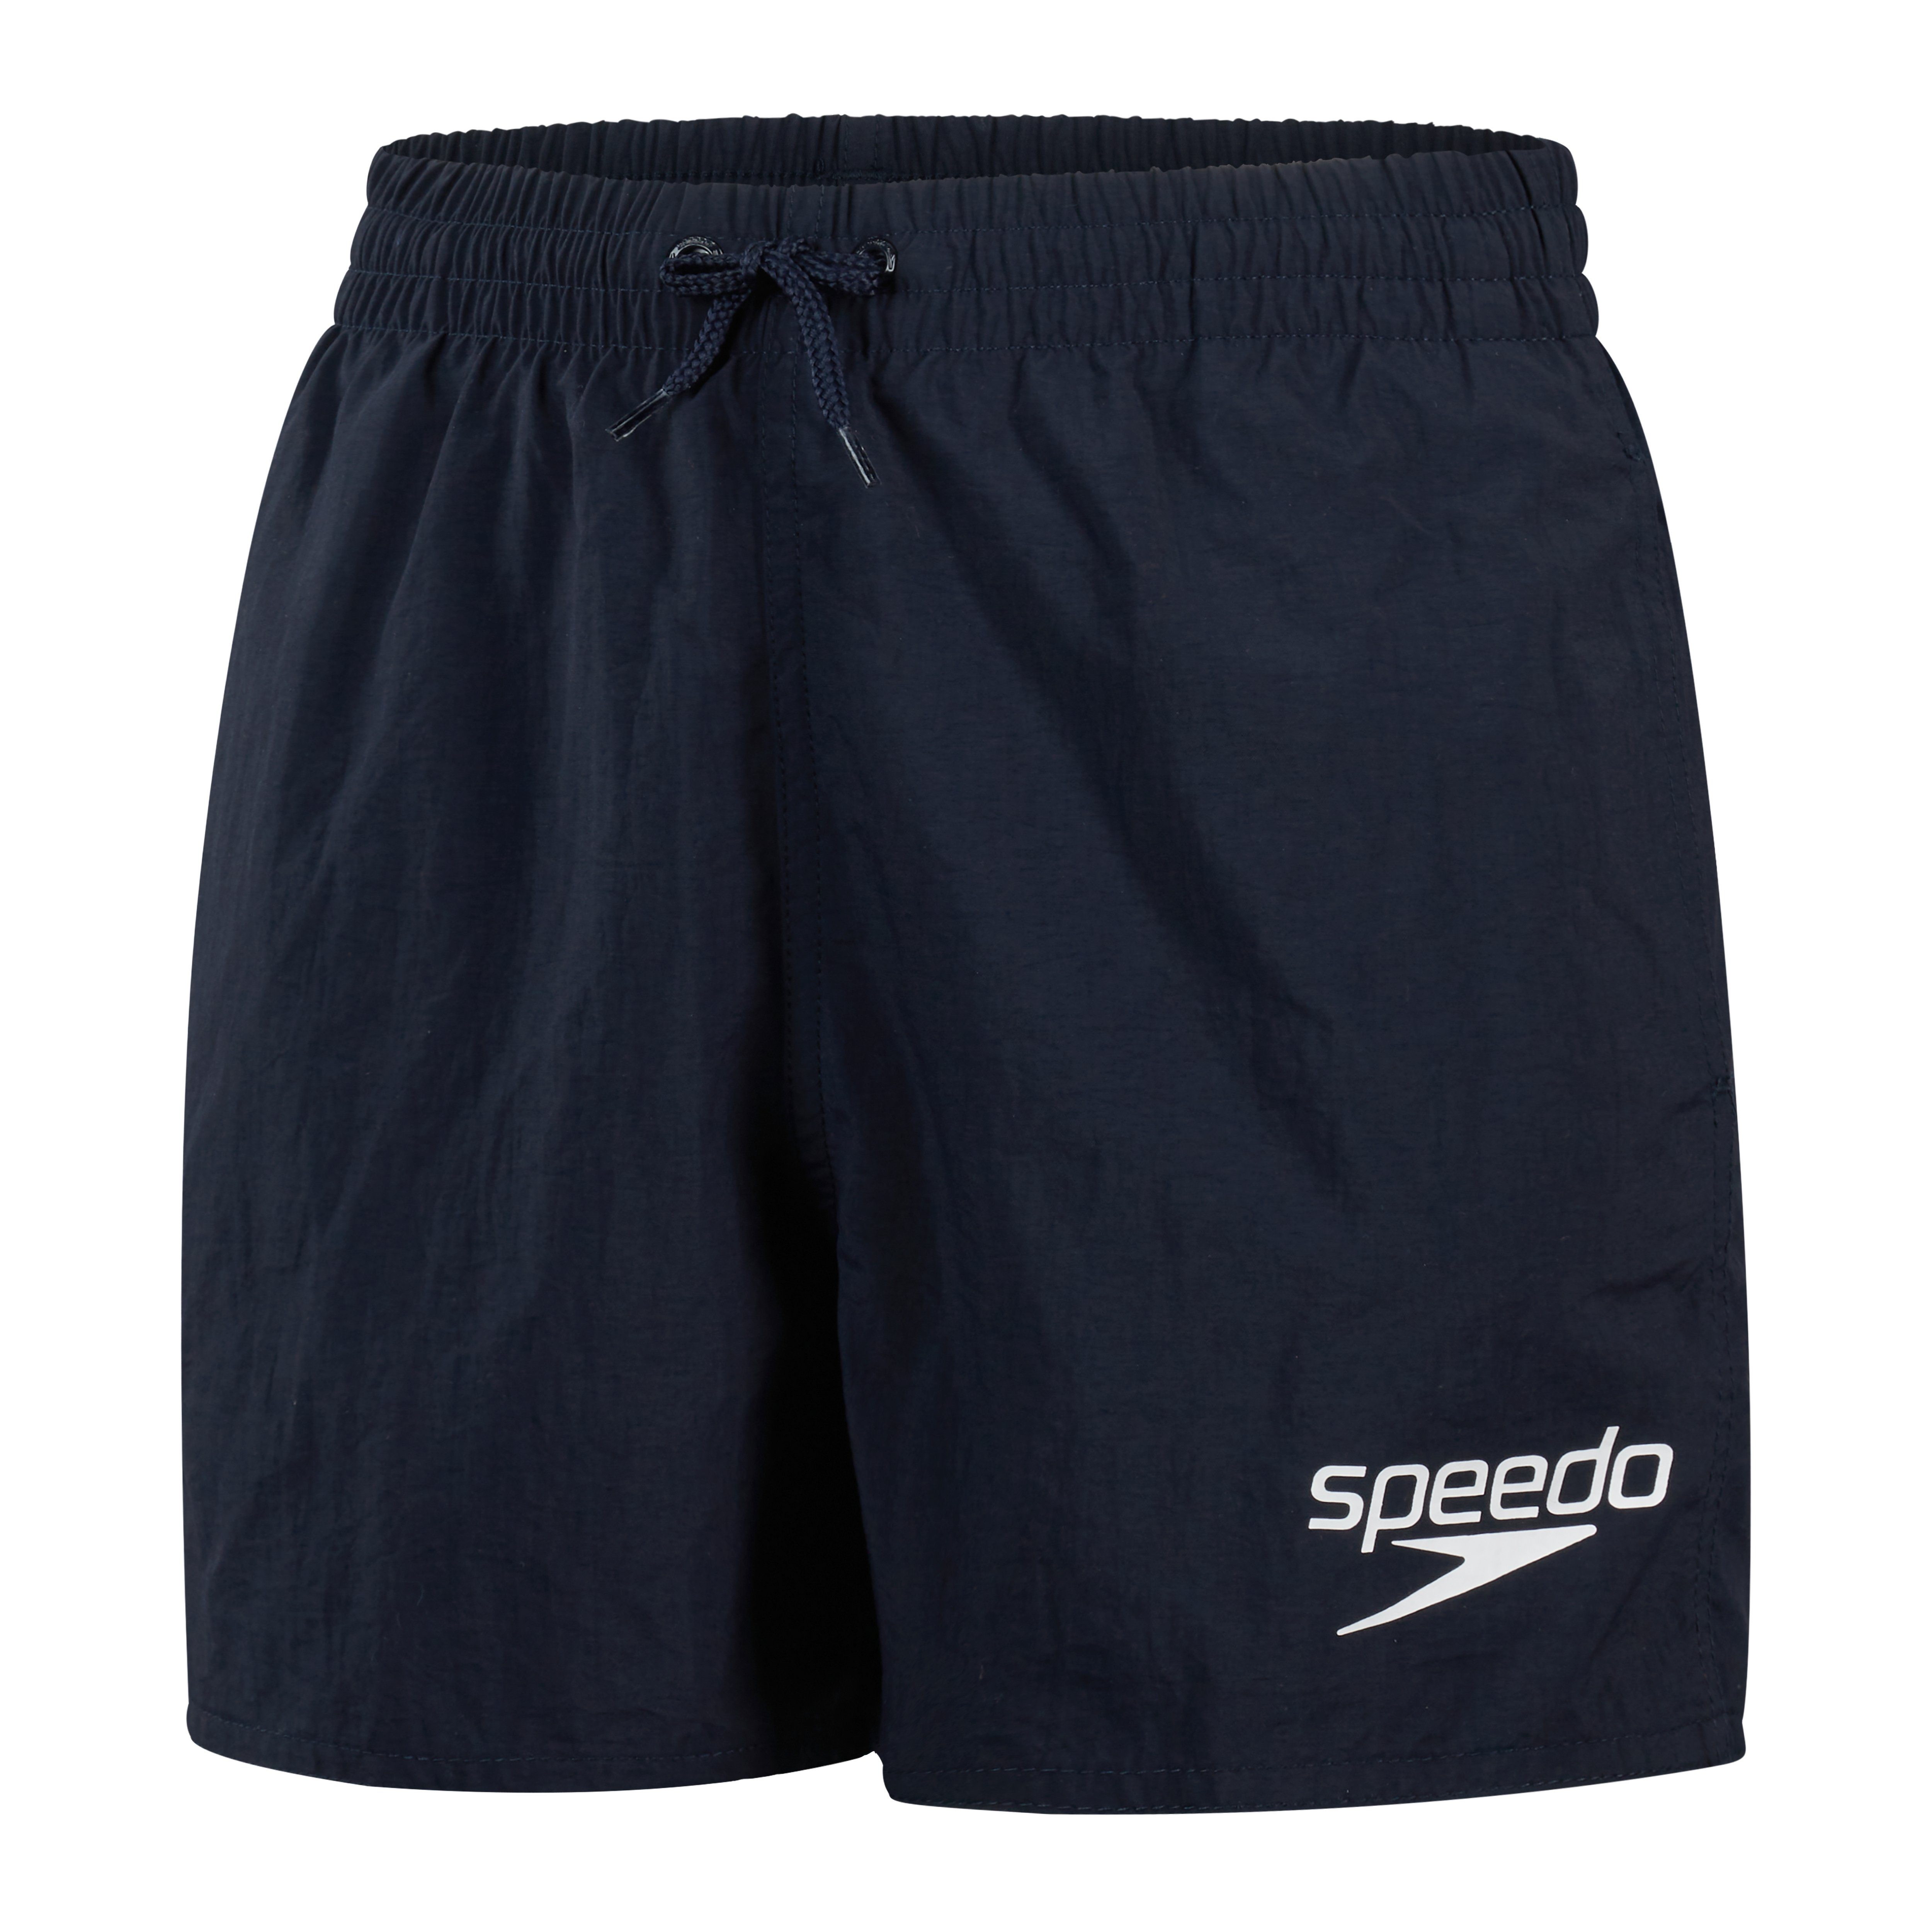 Kinder Verstellbare Bade-Shorts John True Navy Badeshorts Speedo Passform